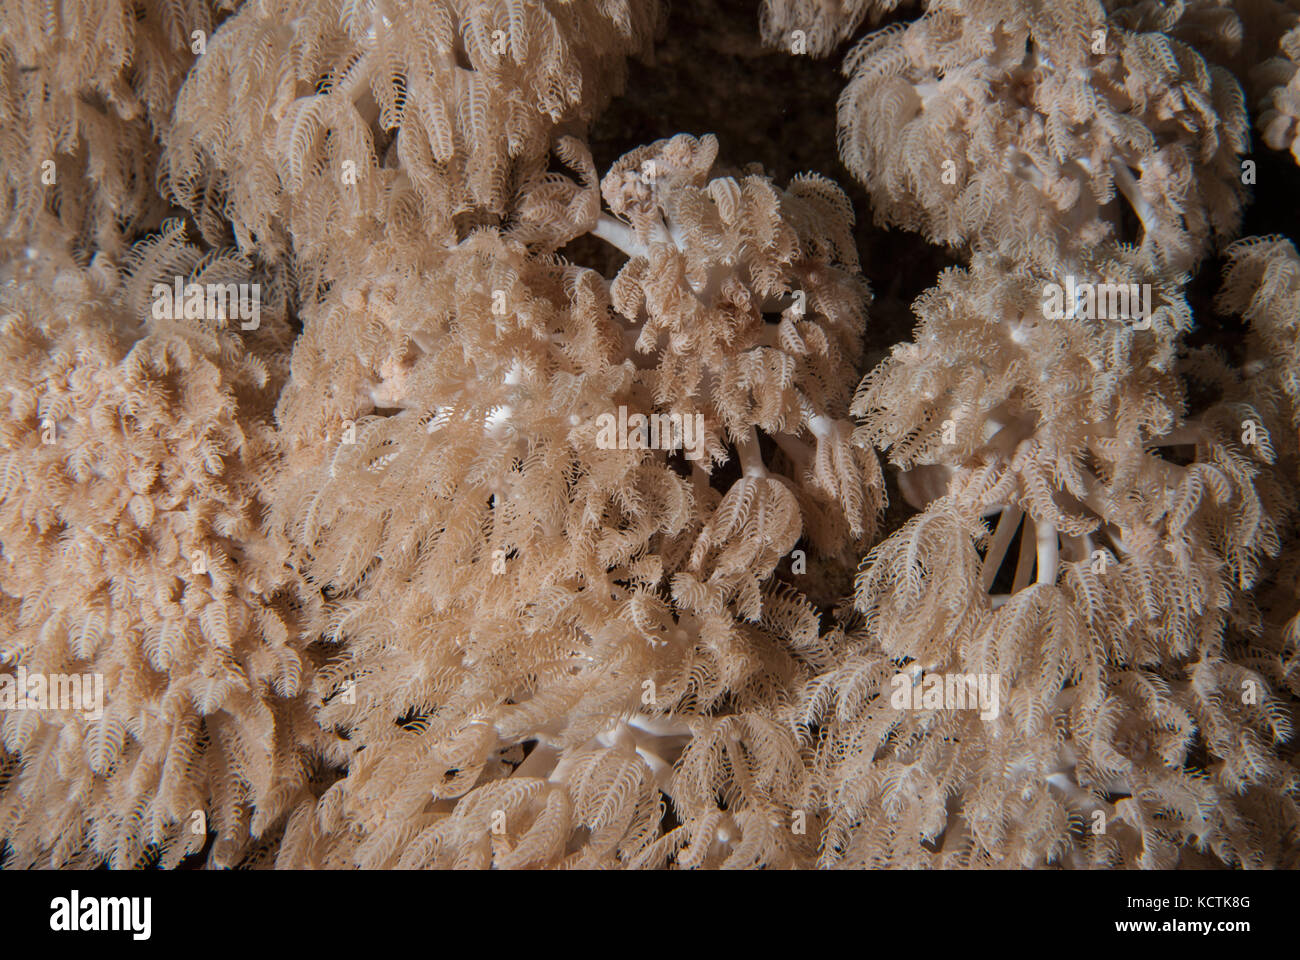 Anthelia sp., Xeriidae, Octocorallia, Alcyonacea, soft coral, Sharm el- Sheikh, Red Sea, Egypt Stock Photo